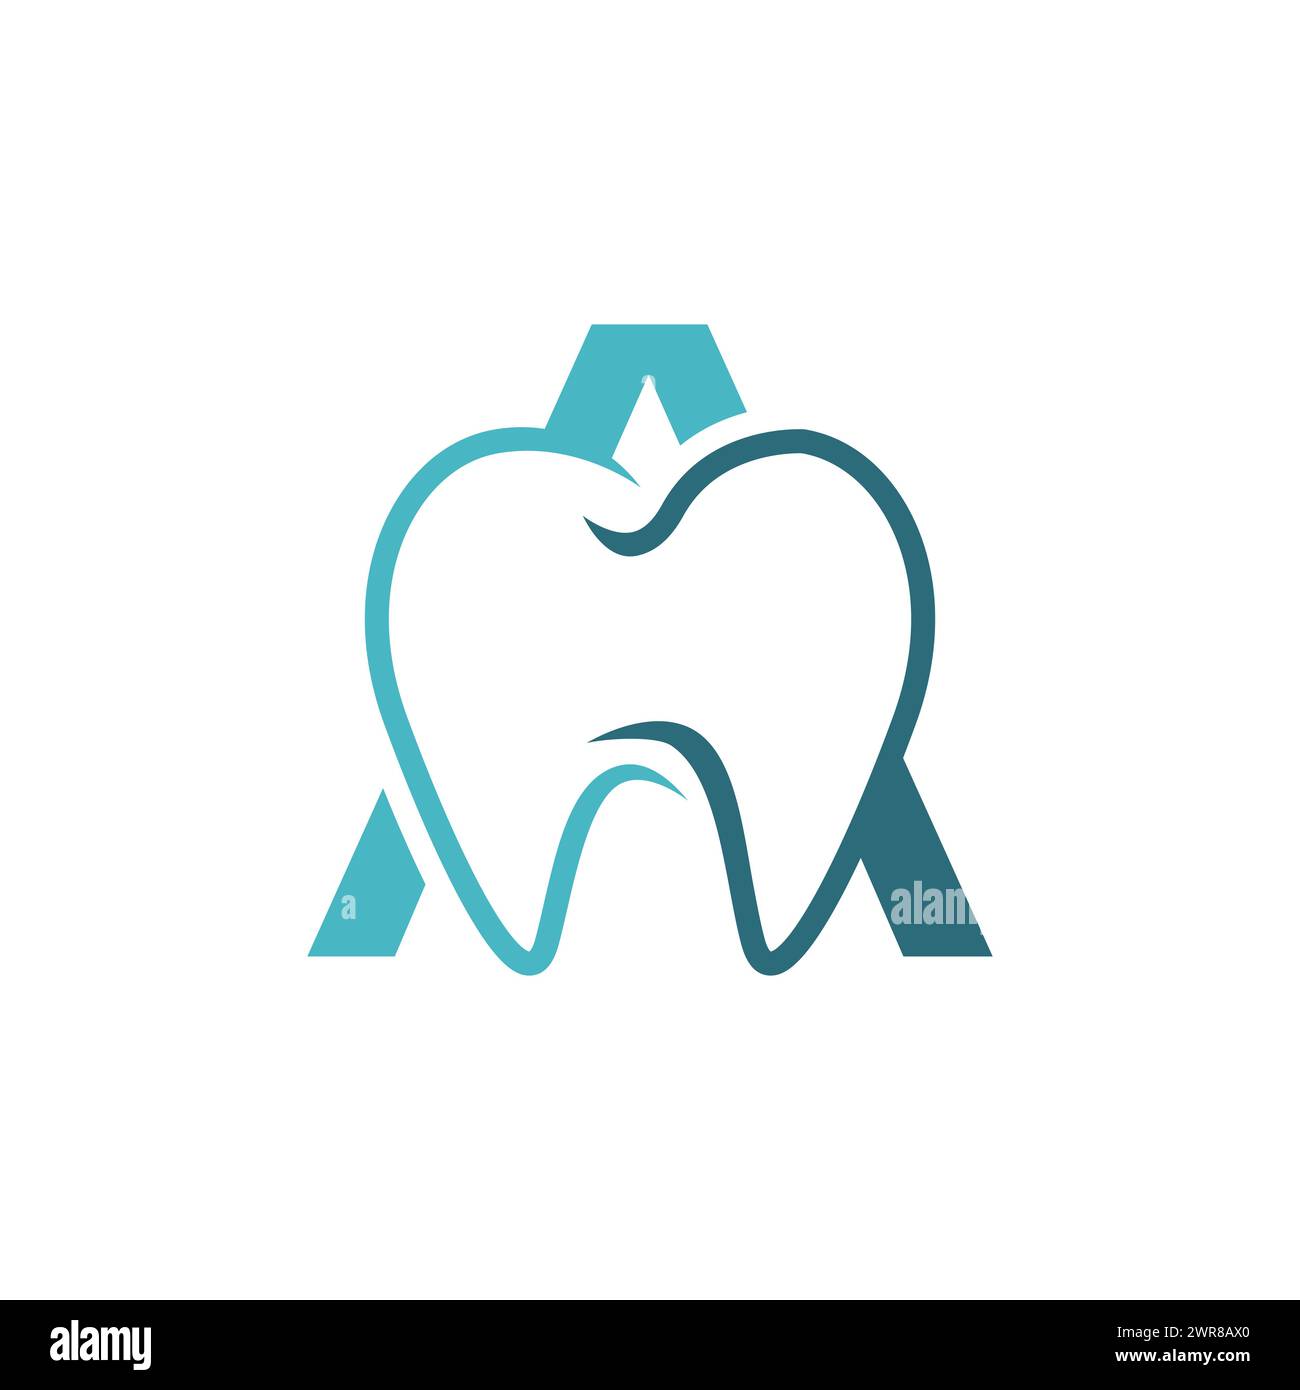 Letter a dental tooth logo design vector image. Letter A monogram dental logo design Vector Stock Vector